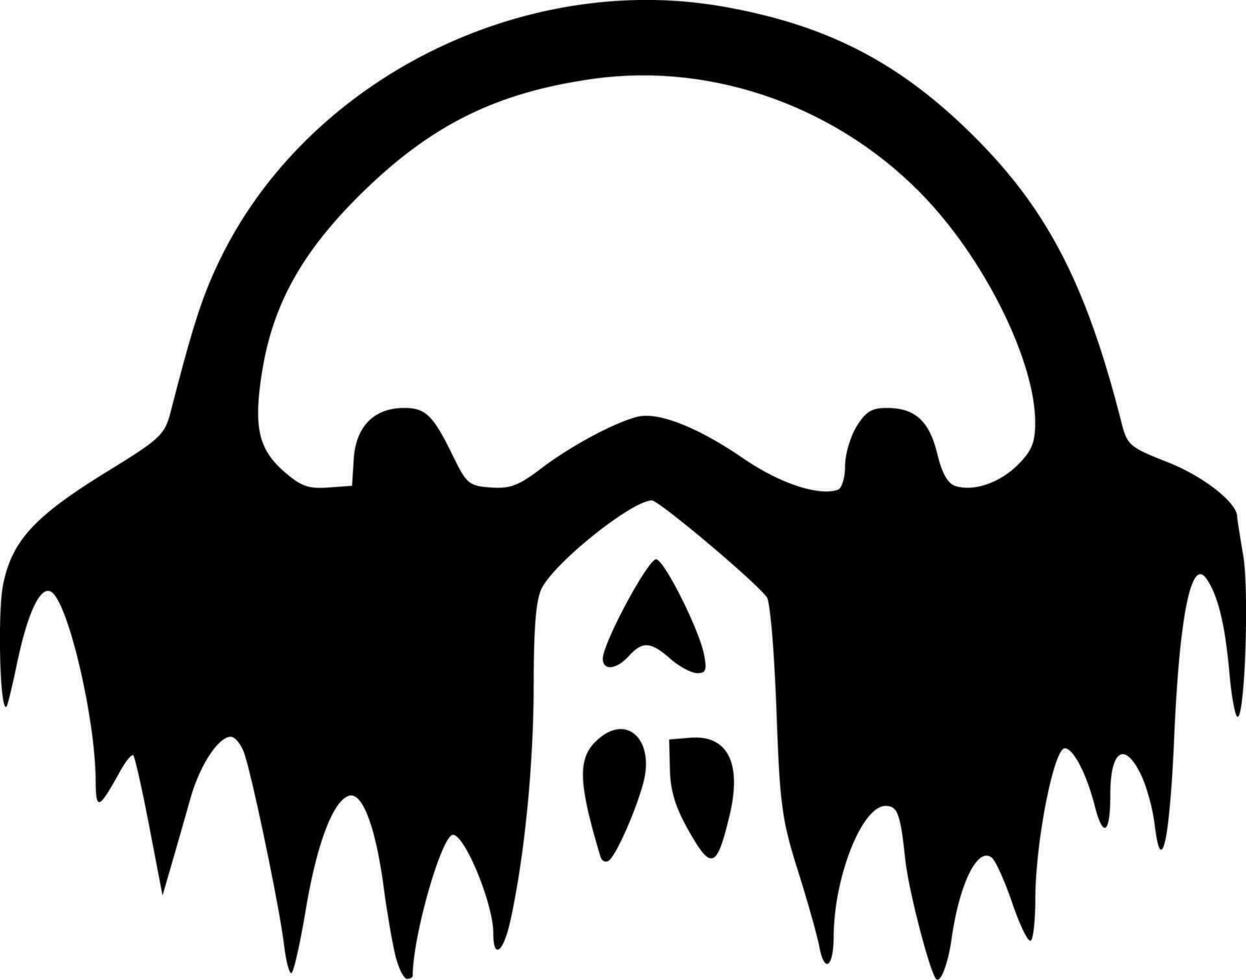 evil monster icon vector